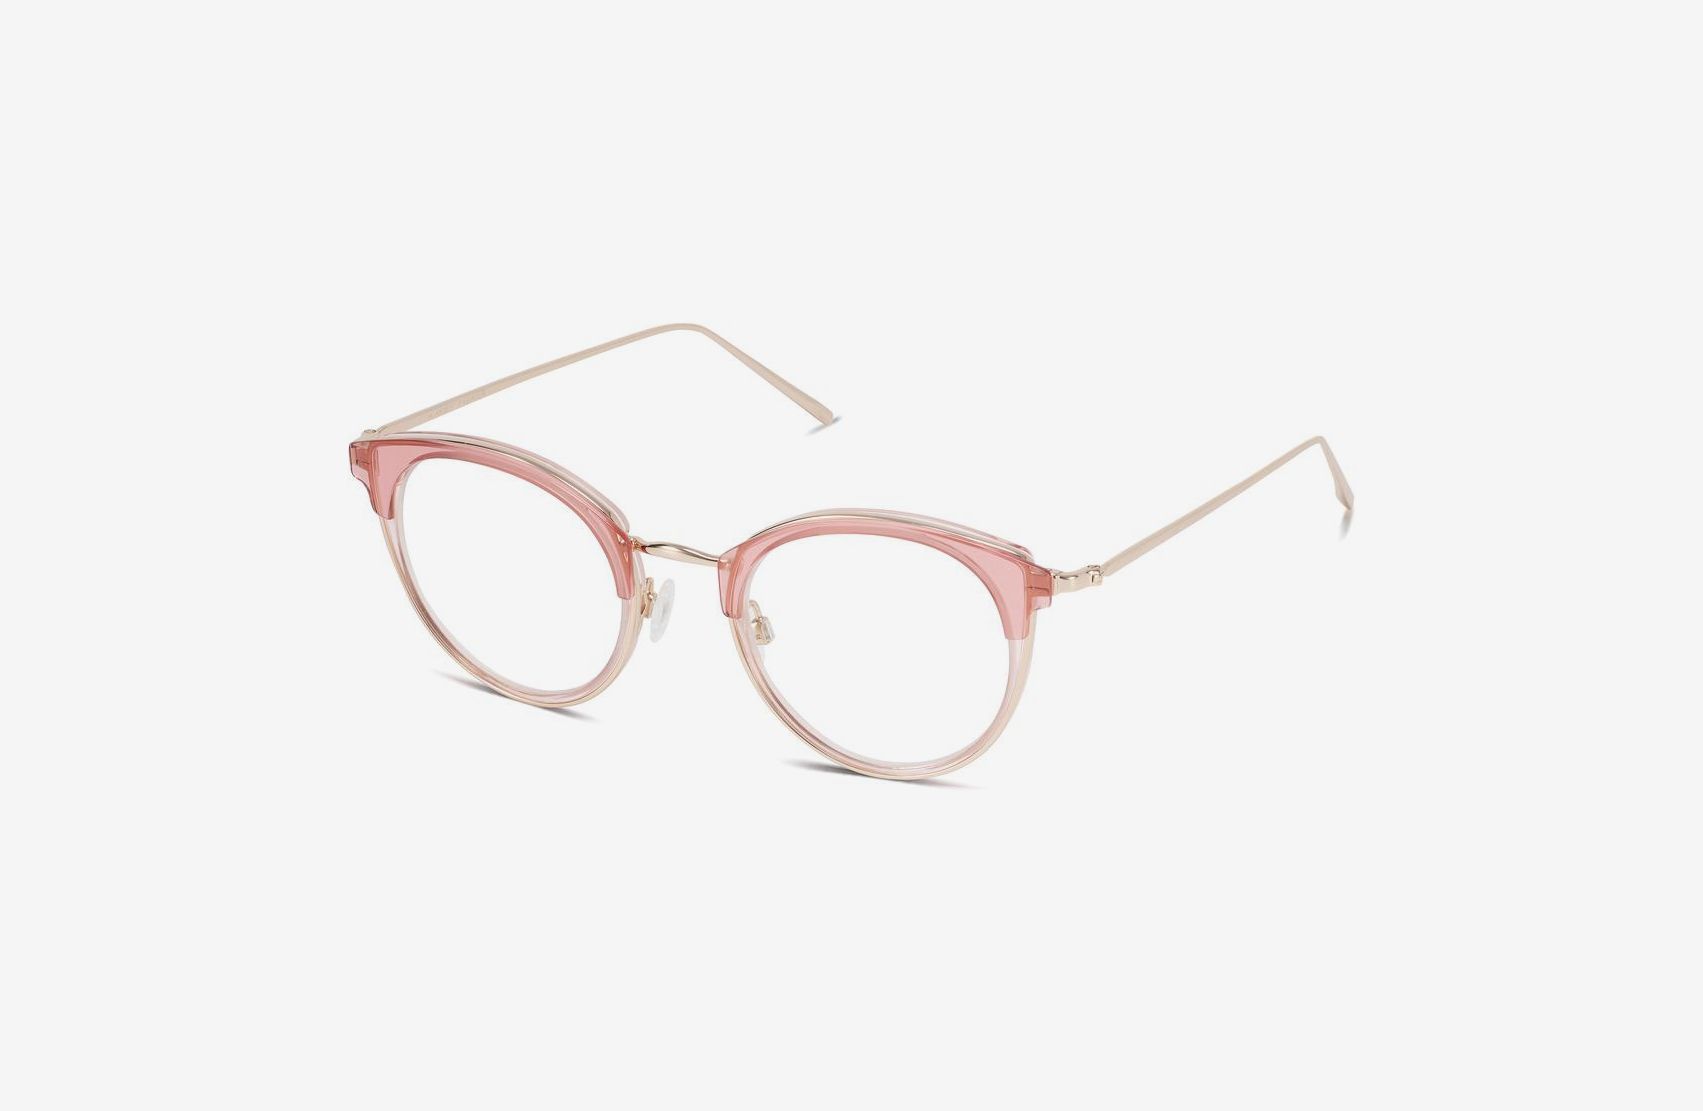 Women's Prescription Glasses - Shop 1000+ Beautiful Women's Glasses